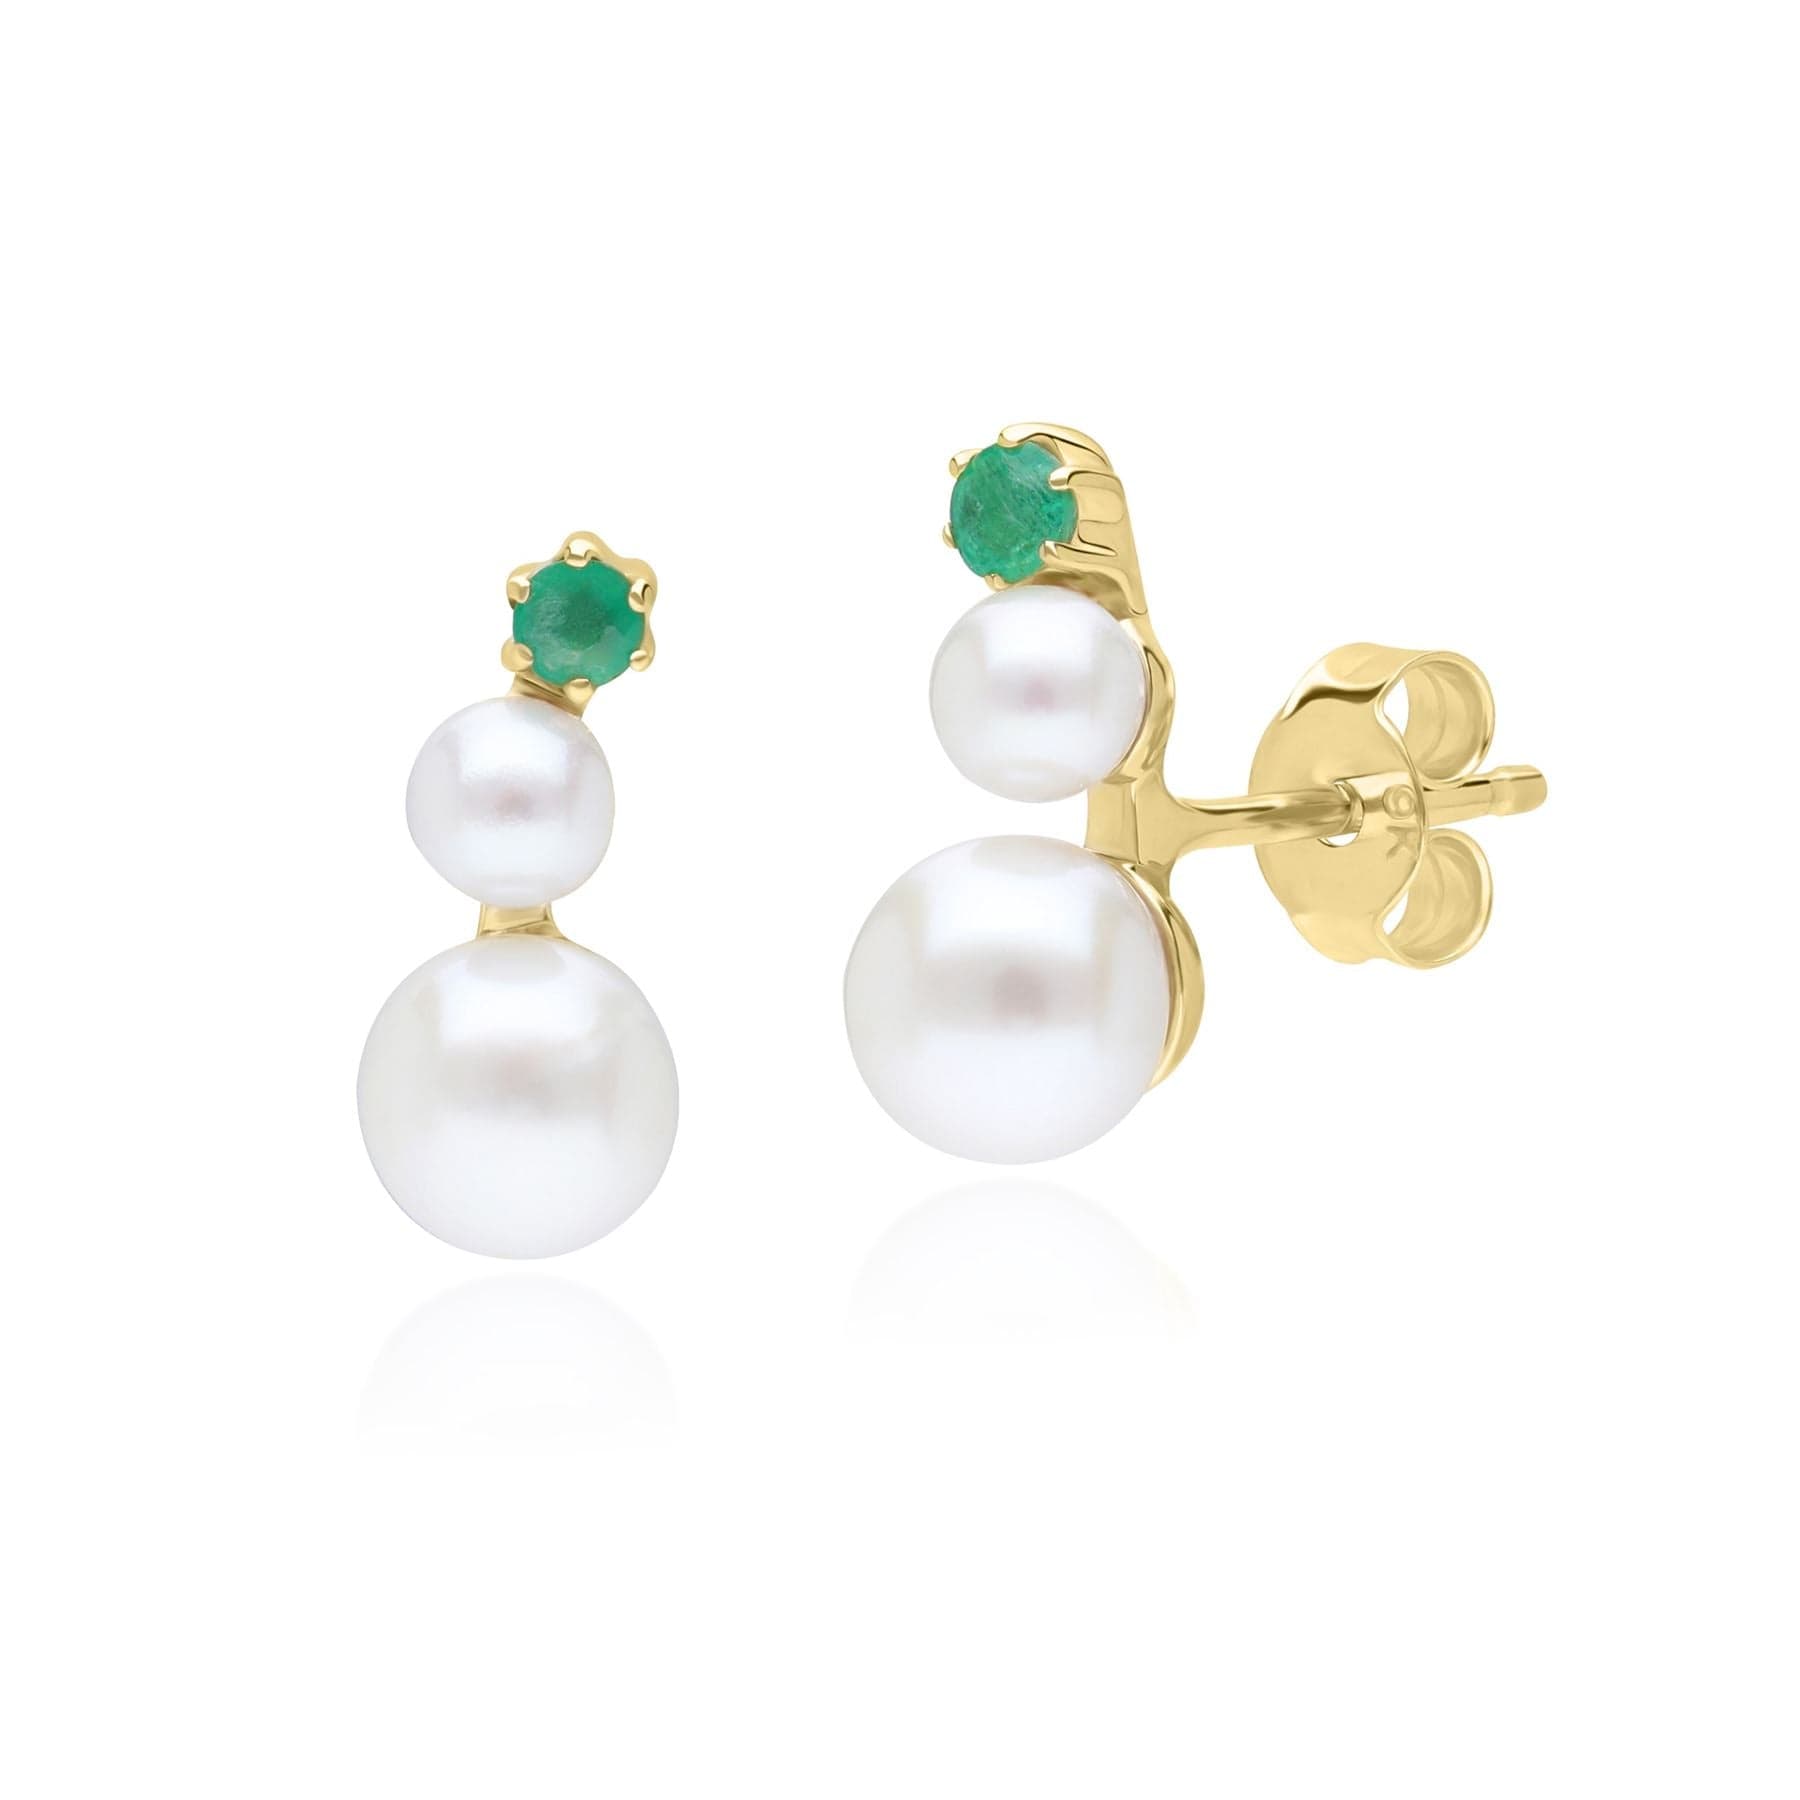 Modern Pearl & Emerald Climber Stud Earrings in 9ct Yellow Gold - Gemondo